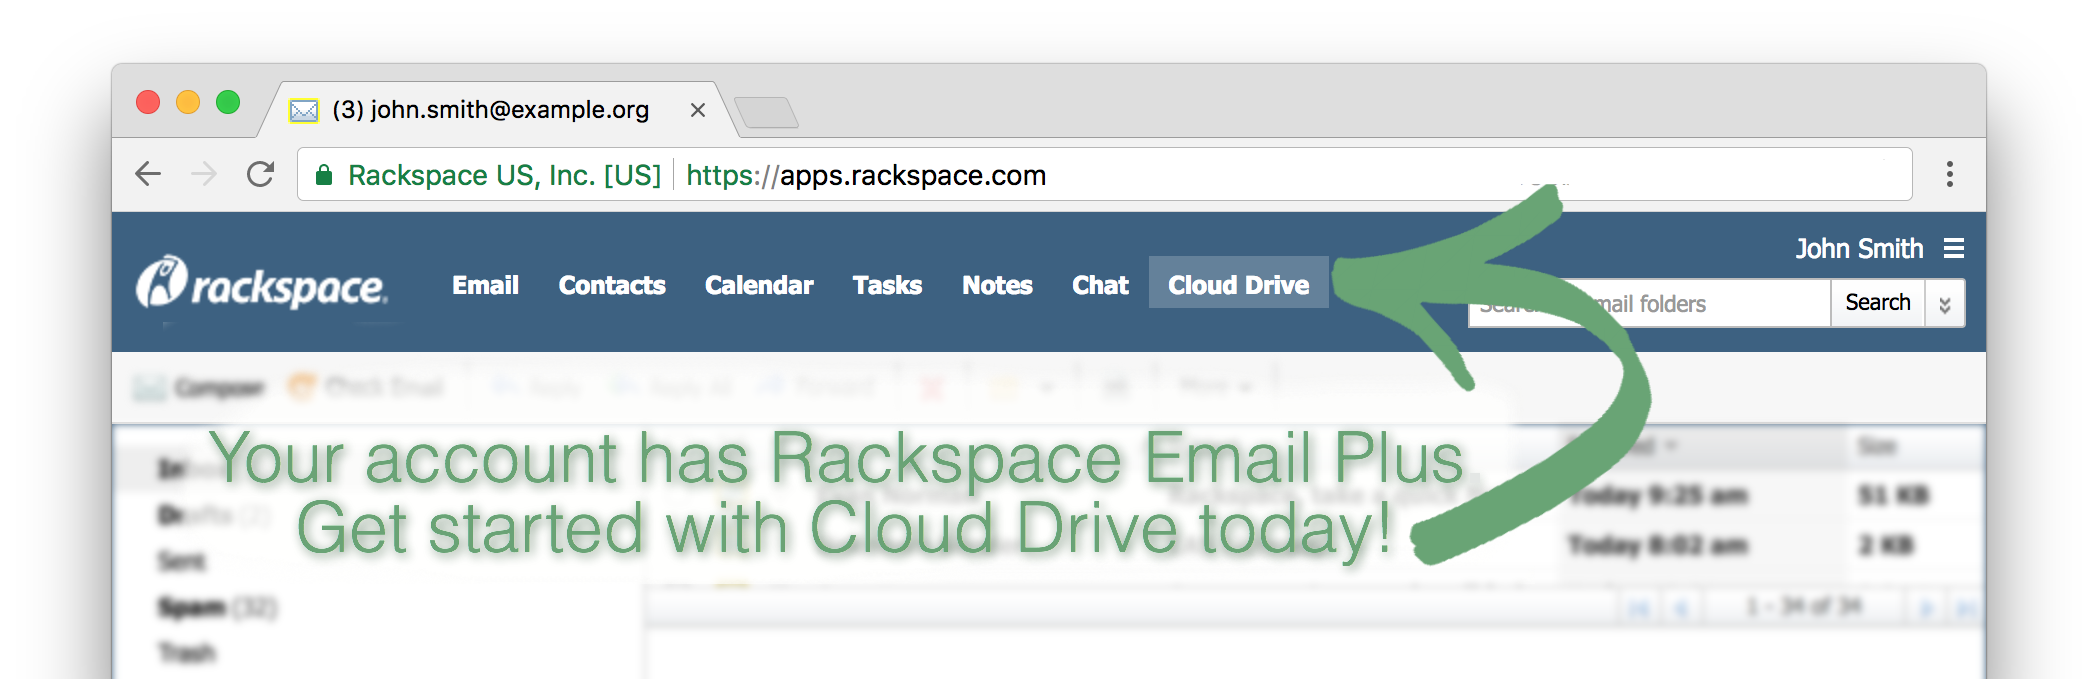 Rackspace Email Plus
